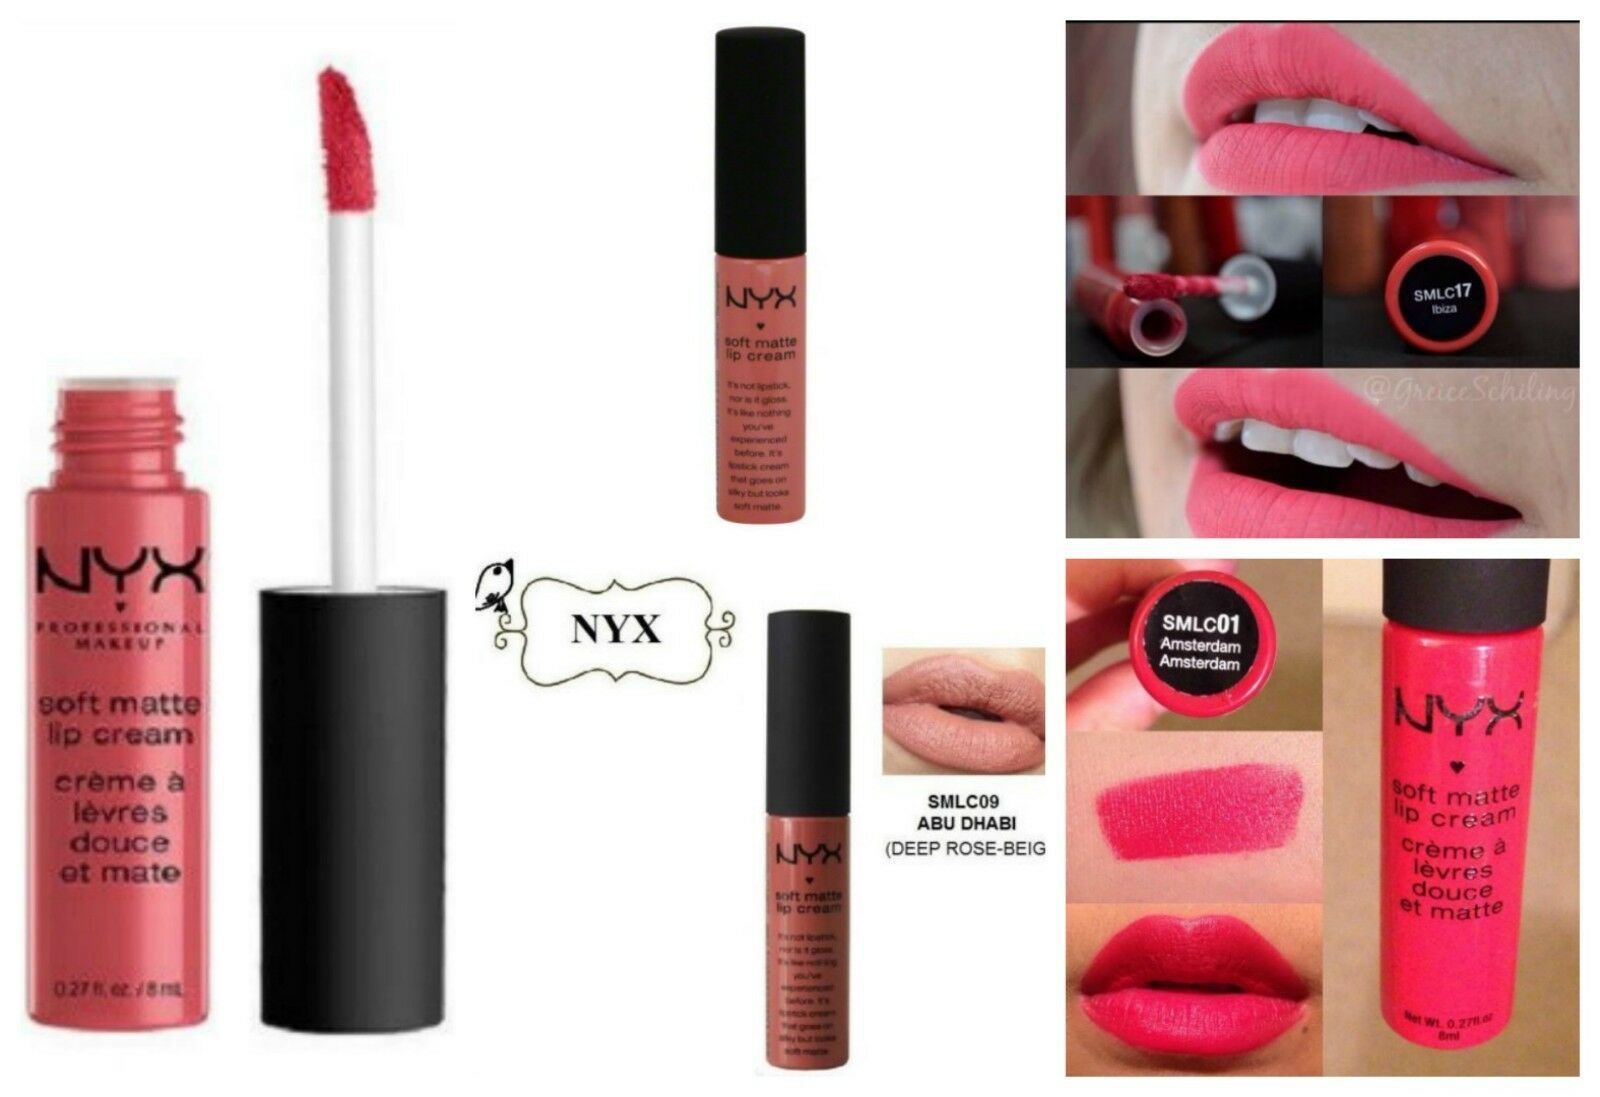 NYX Soft Matte Lip Cream Gloss 5 Pack Set Cosmetics Makeup Pink Neutral Red Pro - $8.99